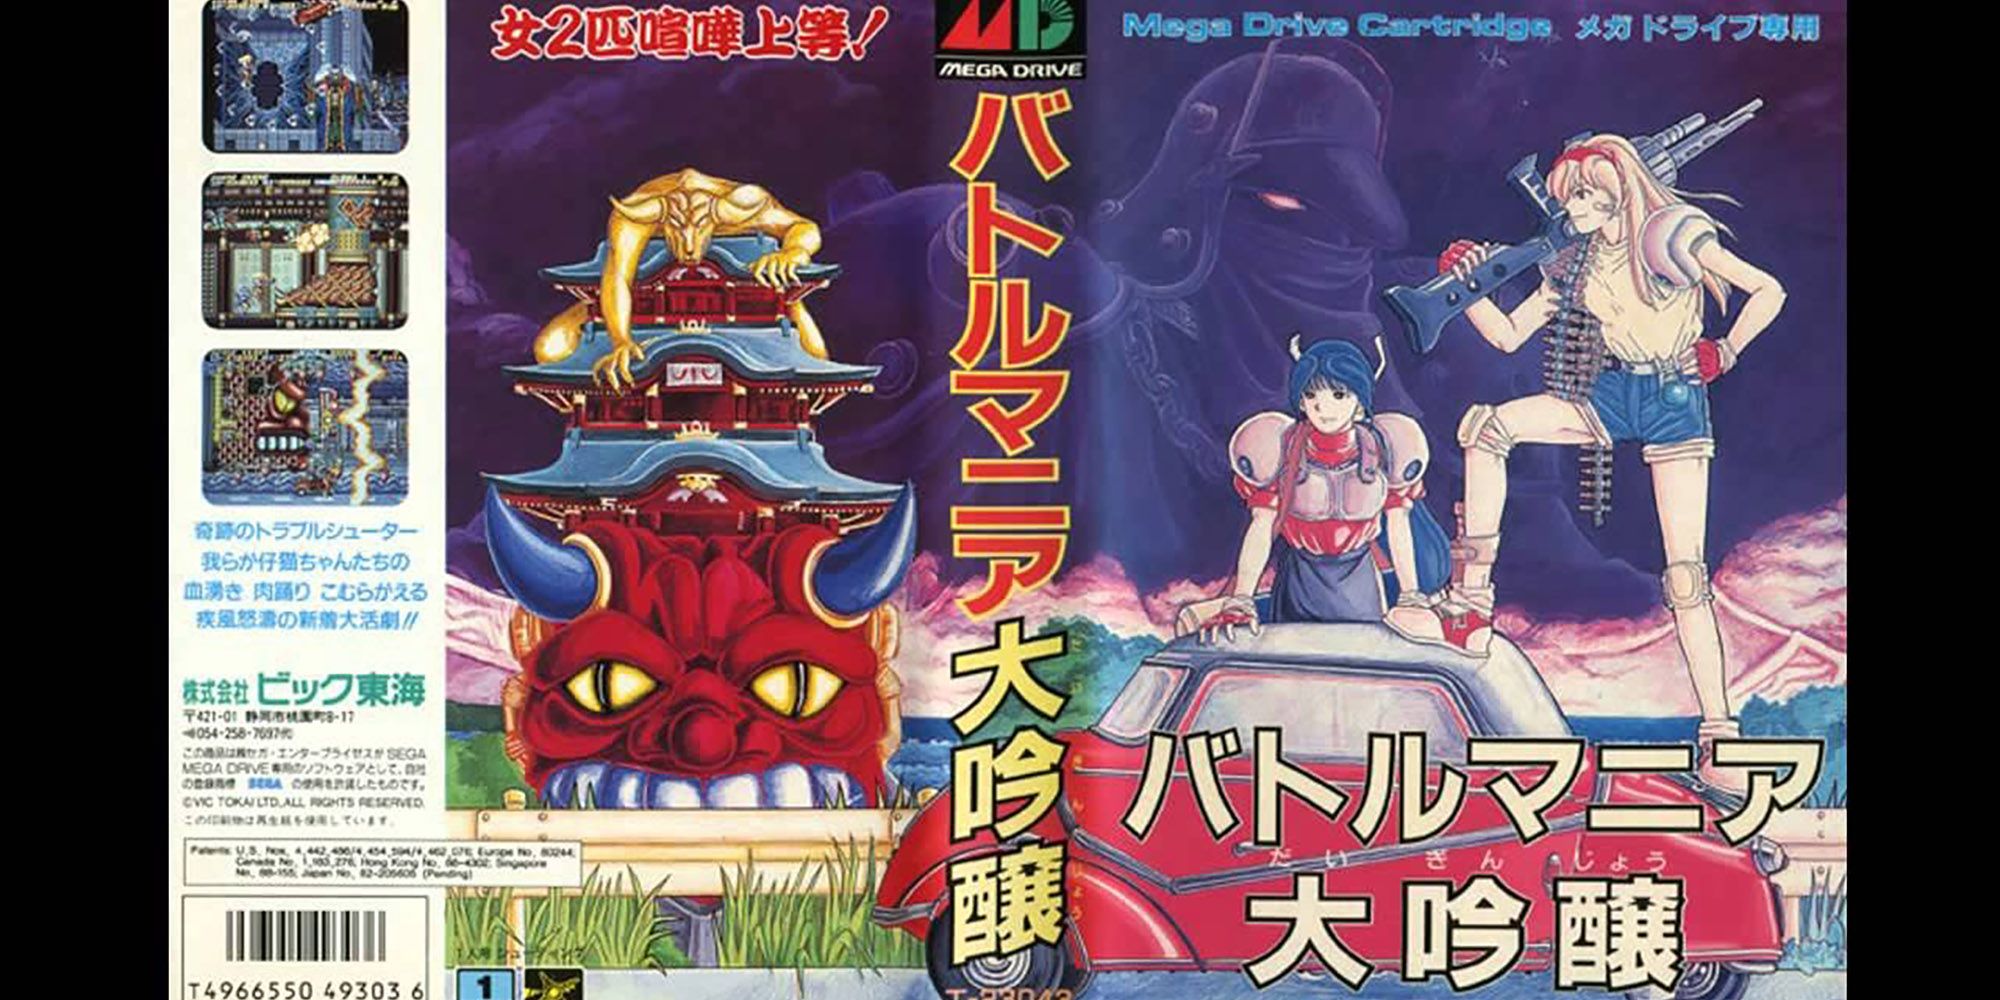 Battle Mania 2's Japanese box cover